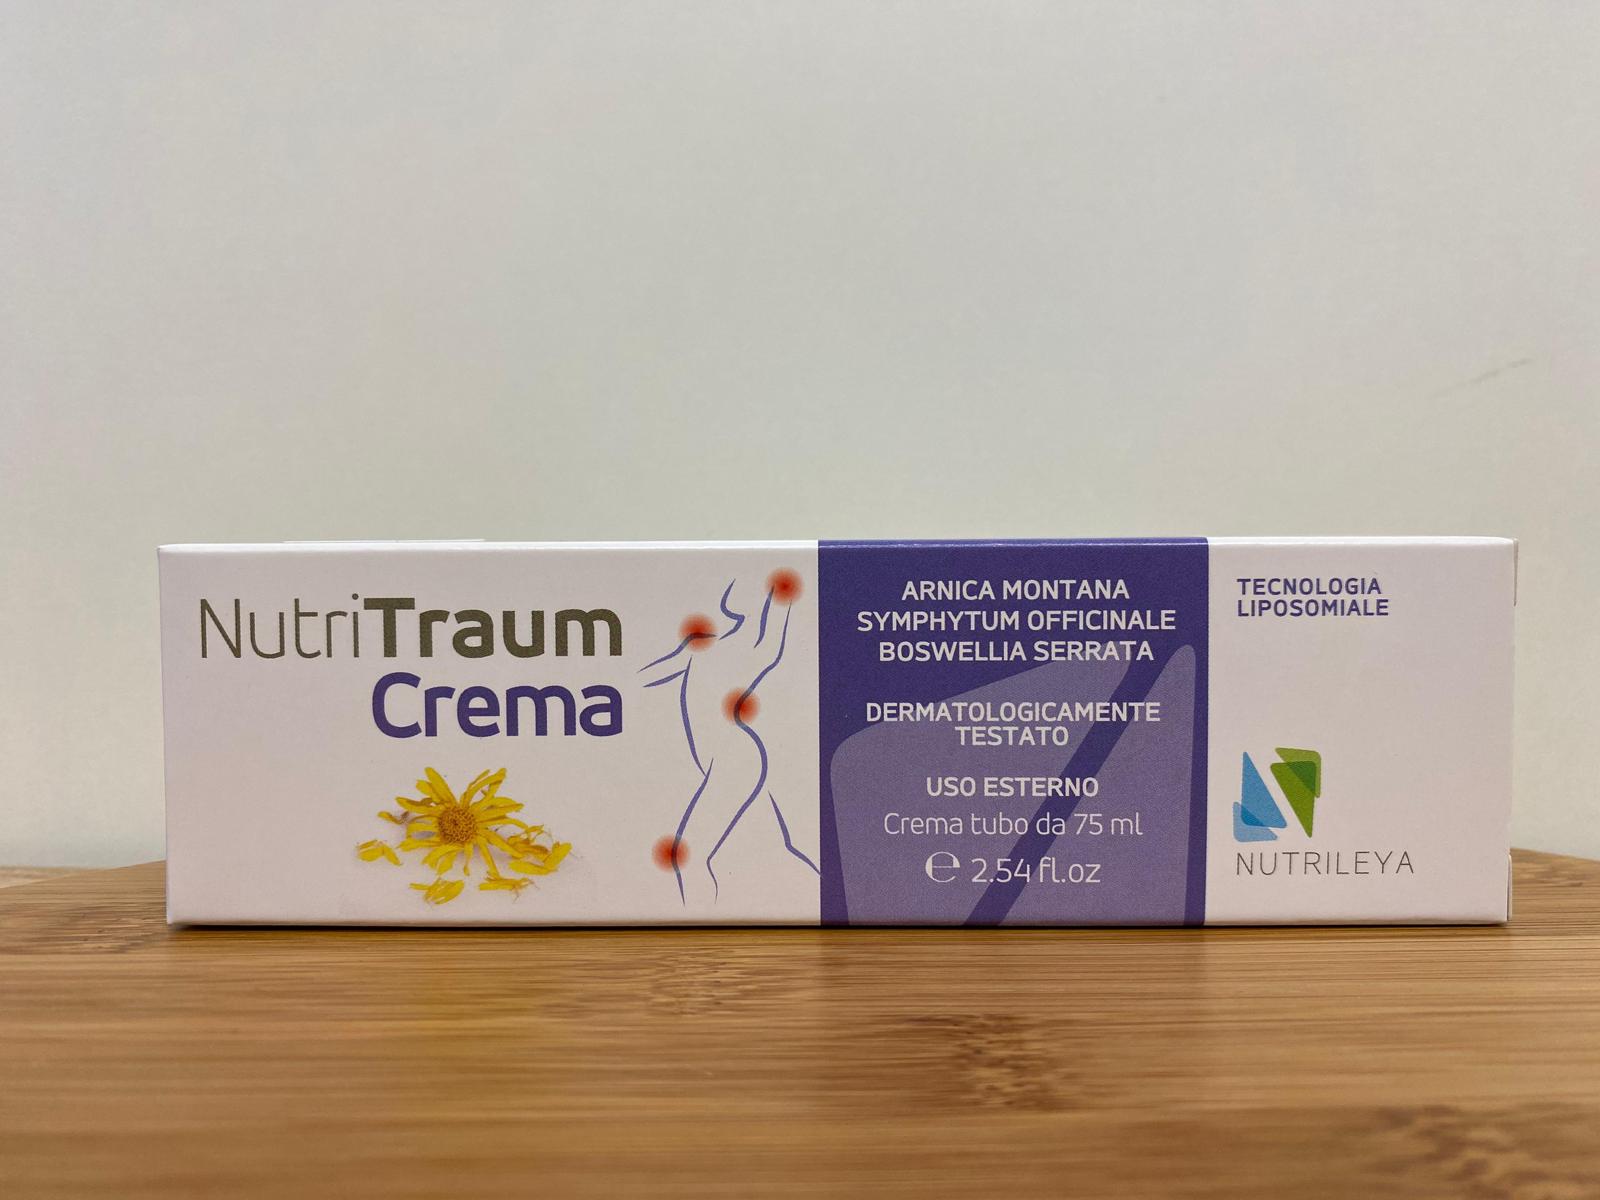 Nutrileya: NutriTraum Crema